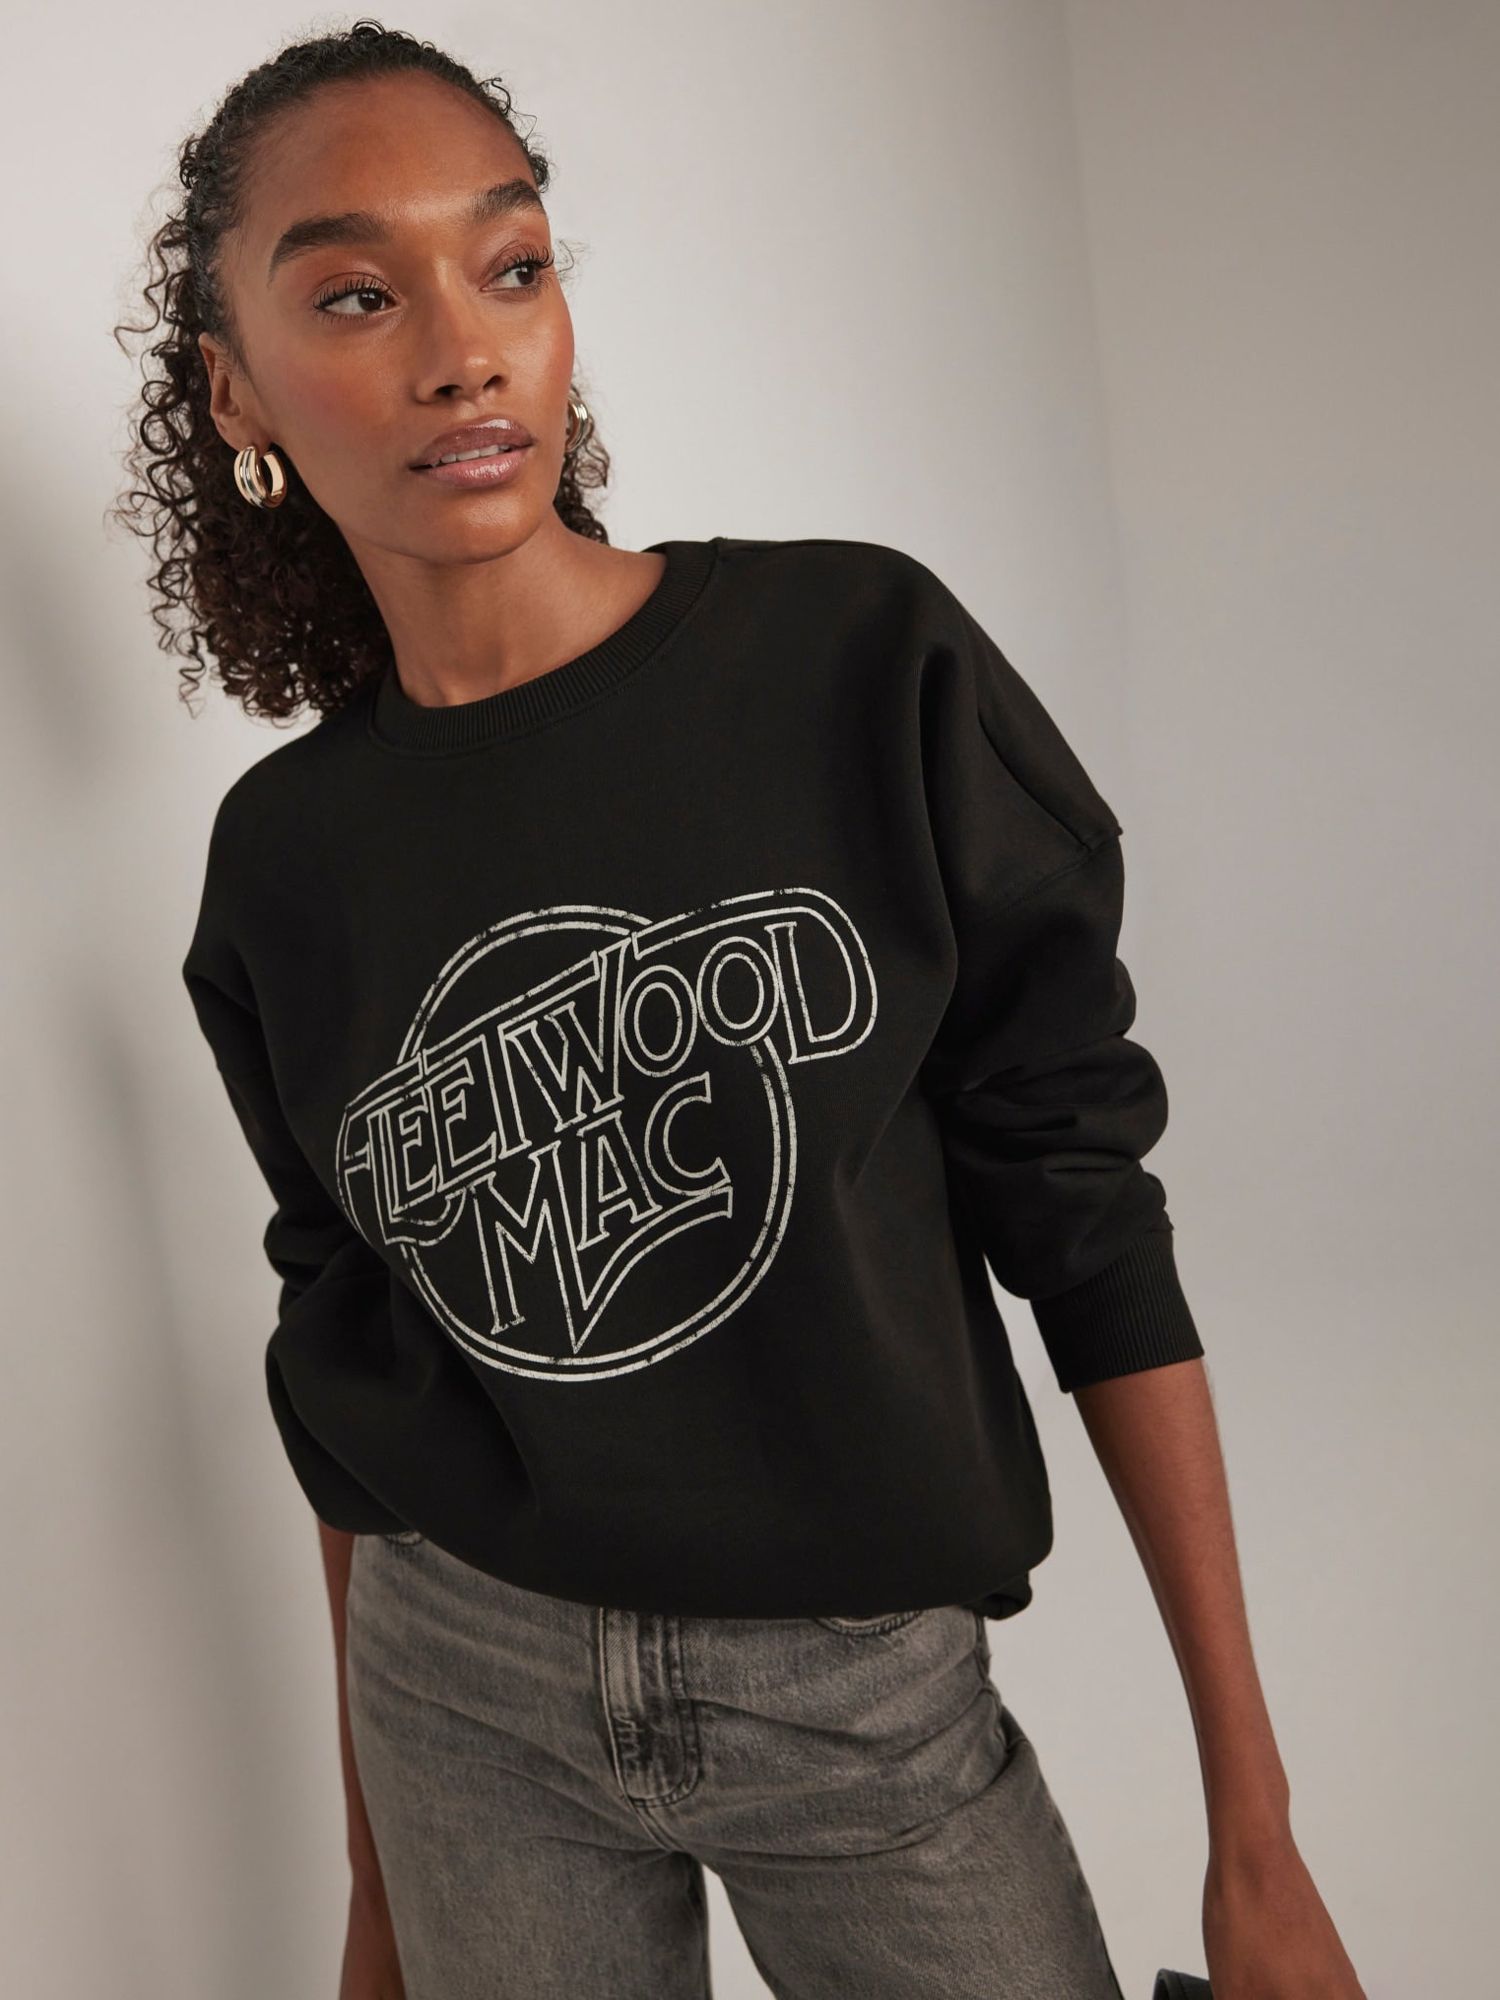 Mint Velvet Fleetwood Mac Sweatshirt, Black at John Lewis & Partners